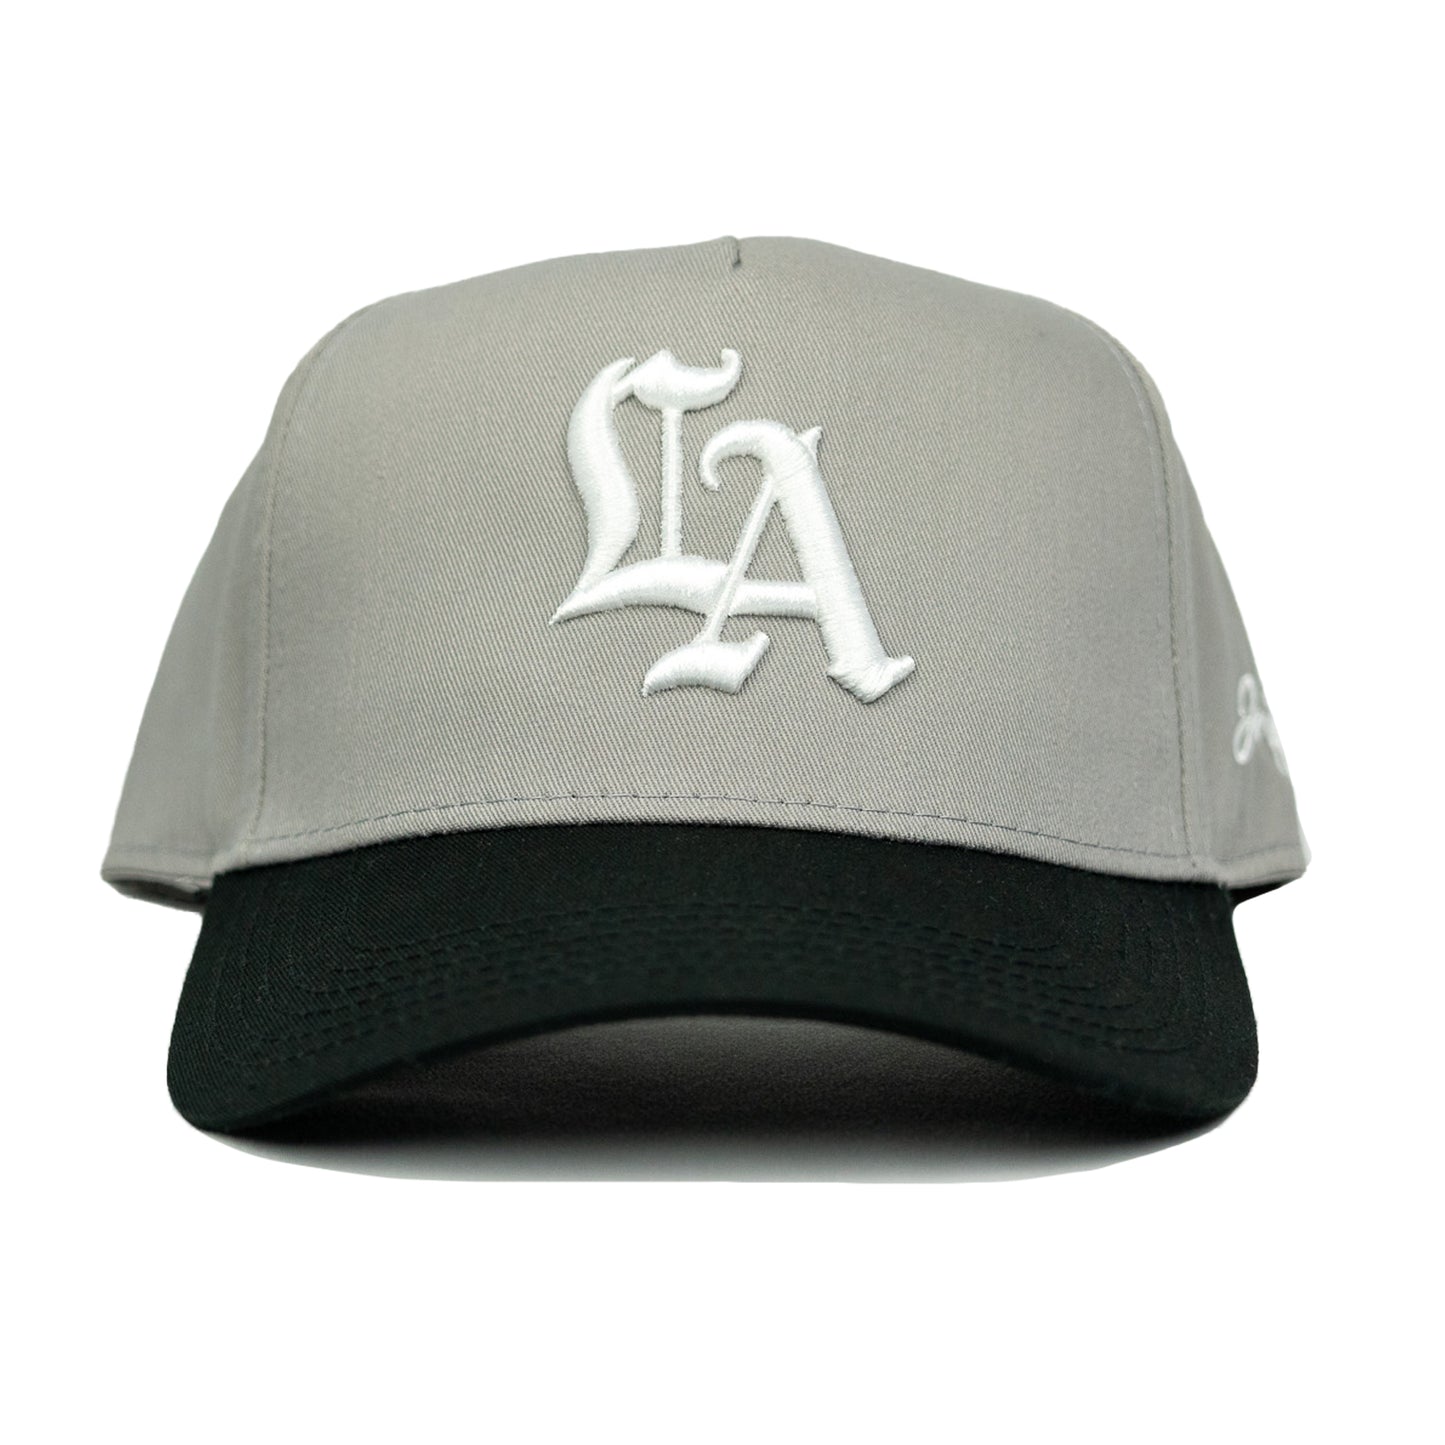 Old English LA Snapback Hat (GREY/BLACK)